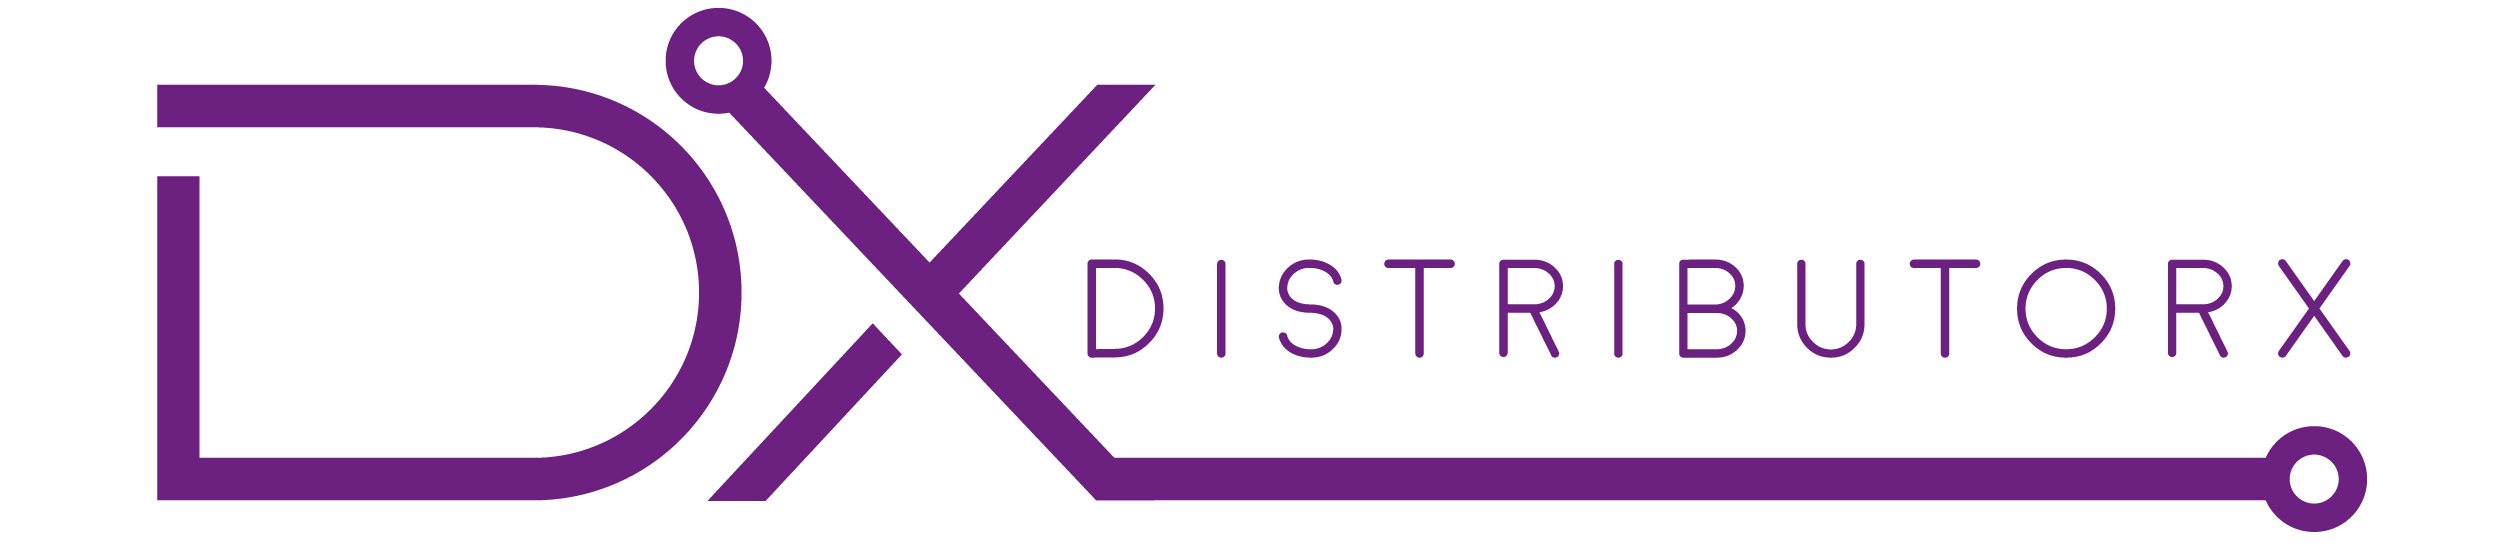 DistributorX-logo